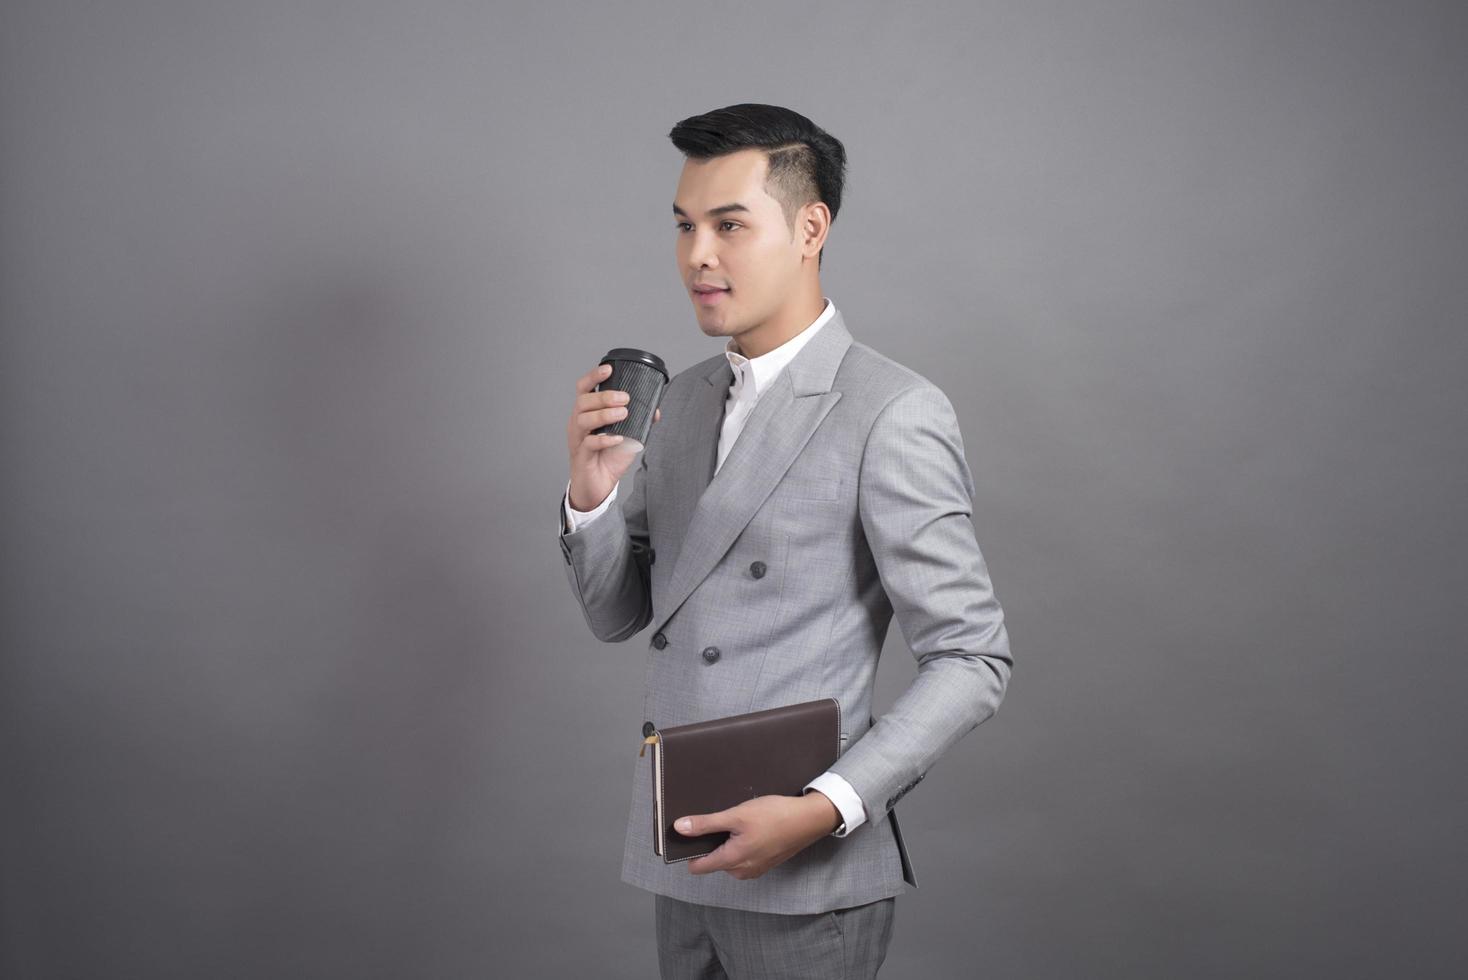 zakenman drinkt koffiepauze, portret in studio grijze achtergrond foto